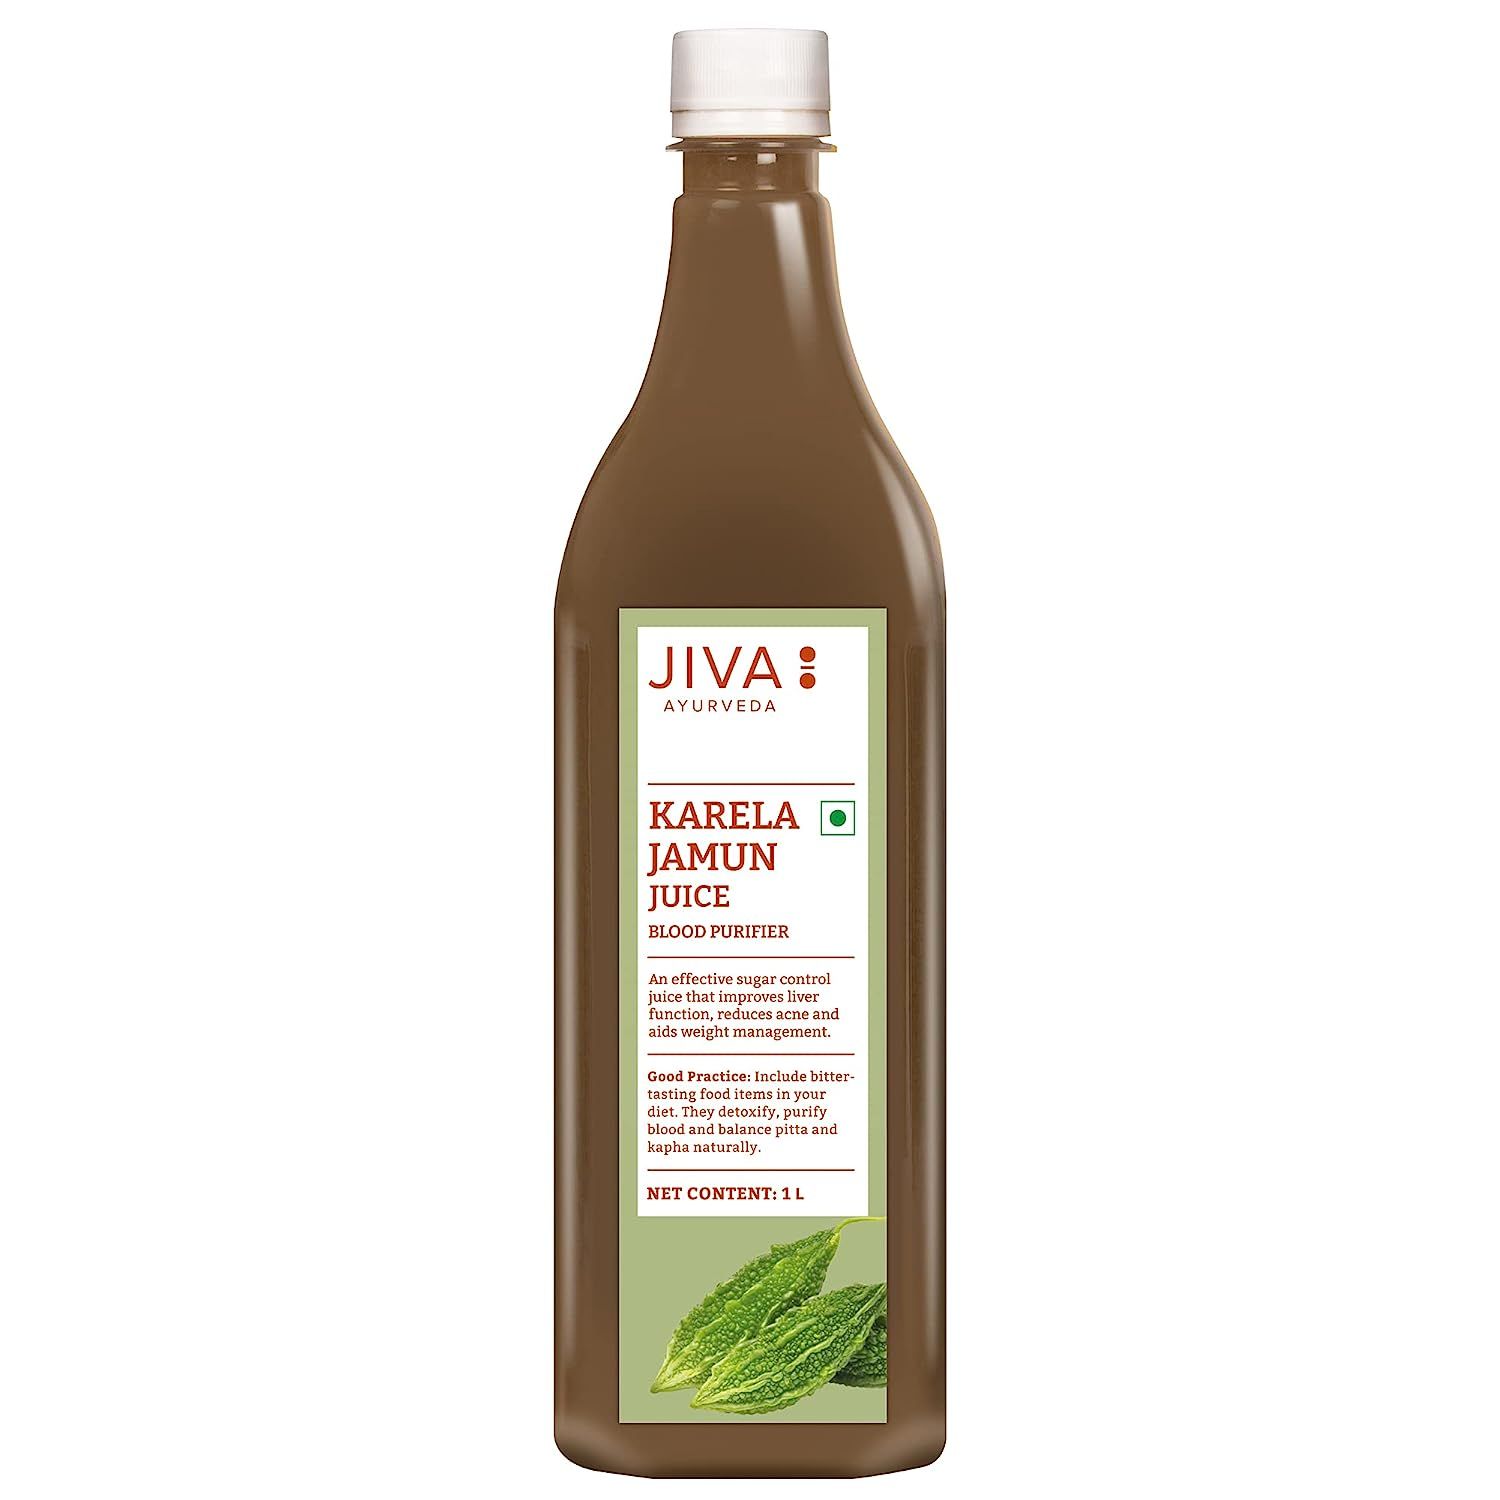 Buy Jiva Ayurveda Karela Jamun Juice at Best Price Online